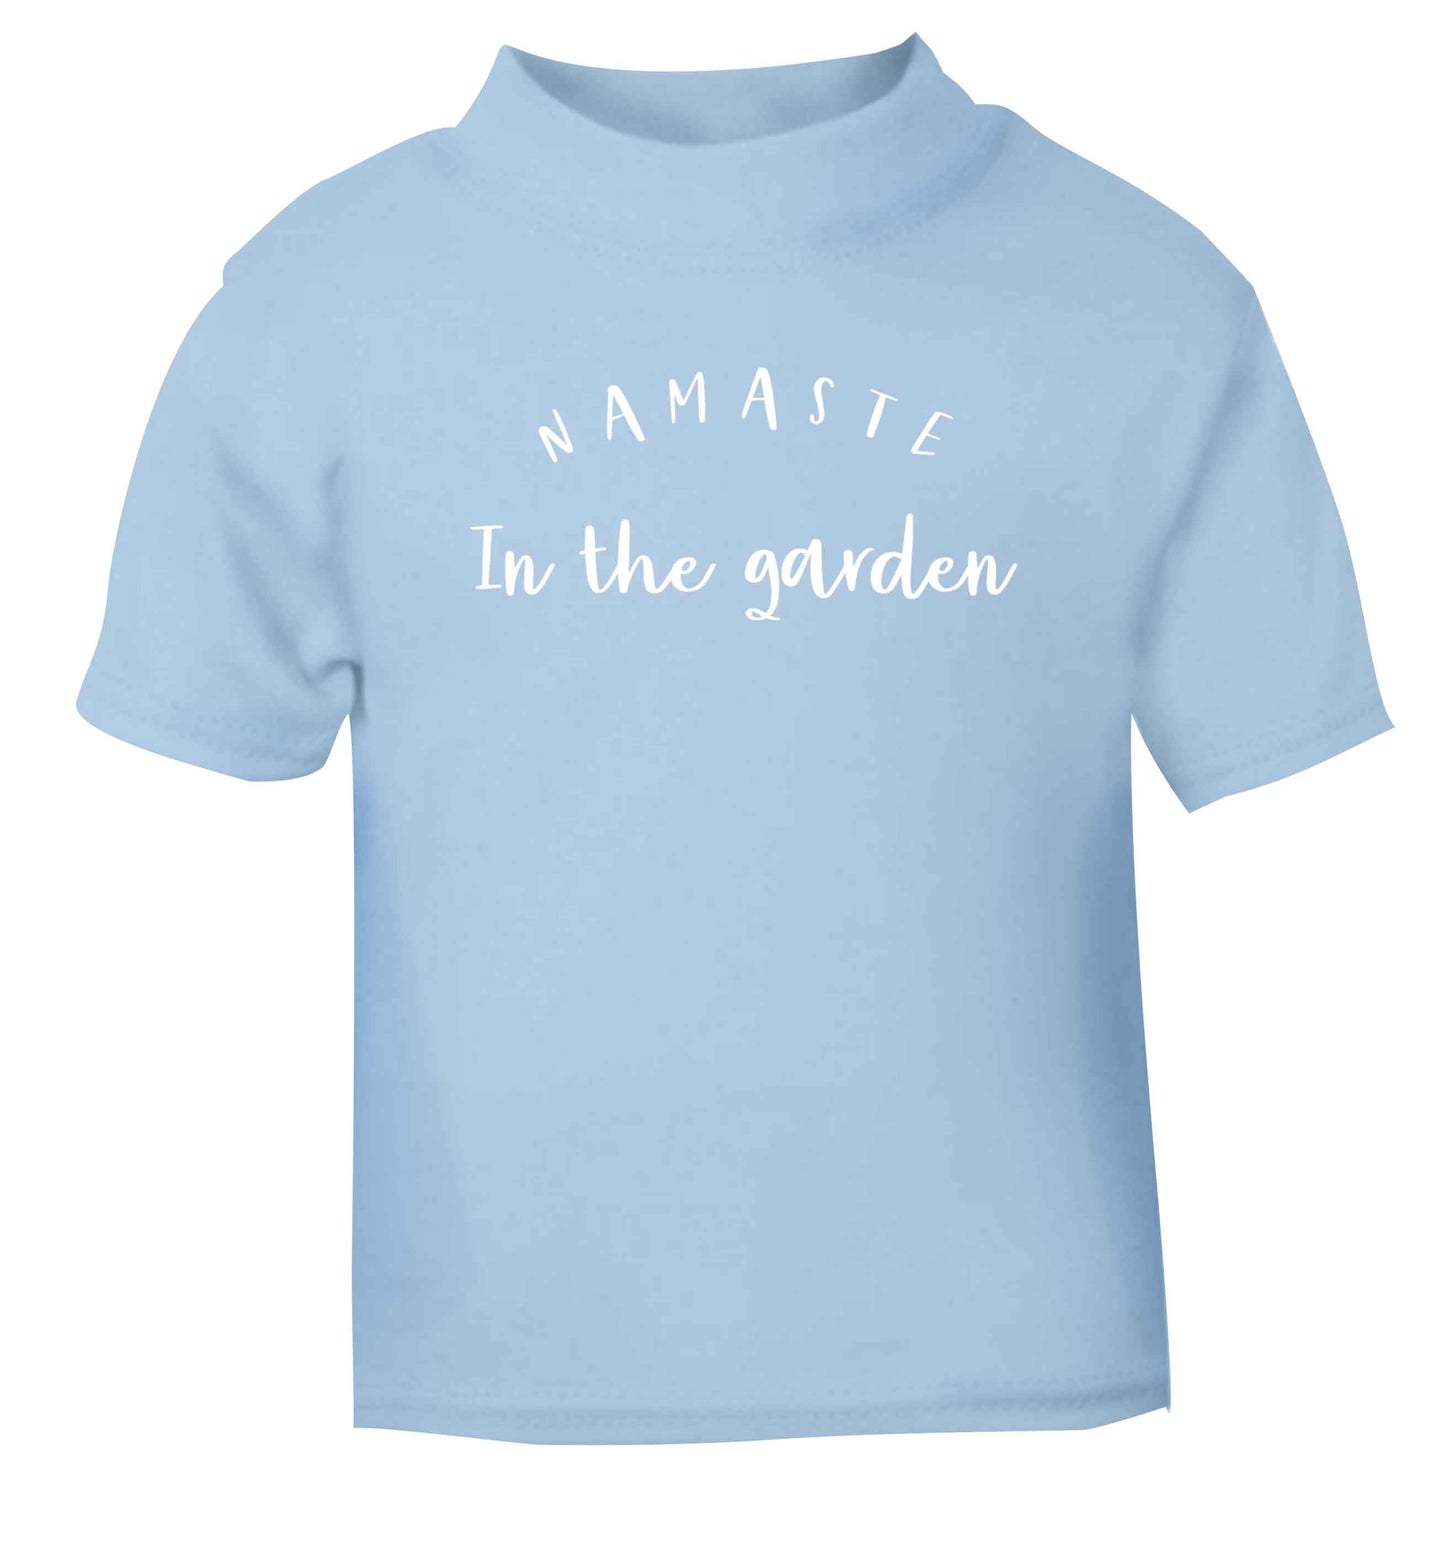 Namaste in the garden light blue Baby Toddler Tshirt 2 Years